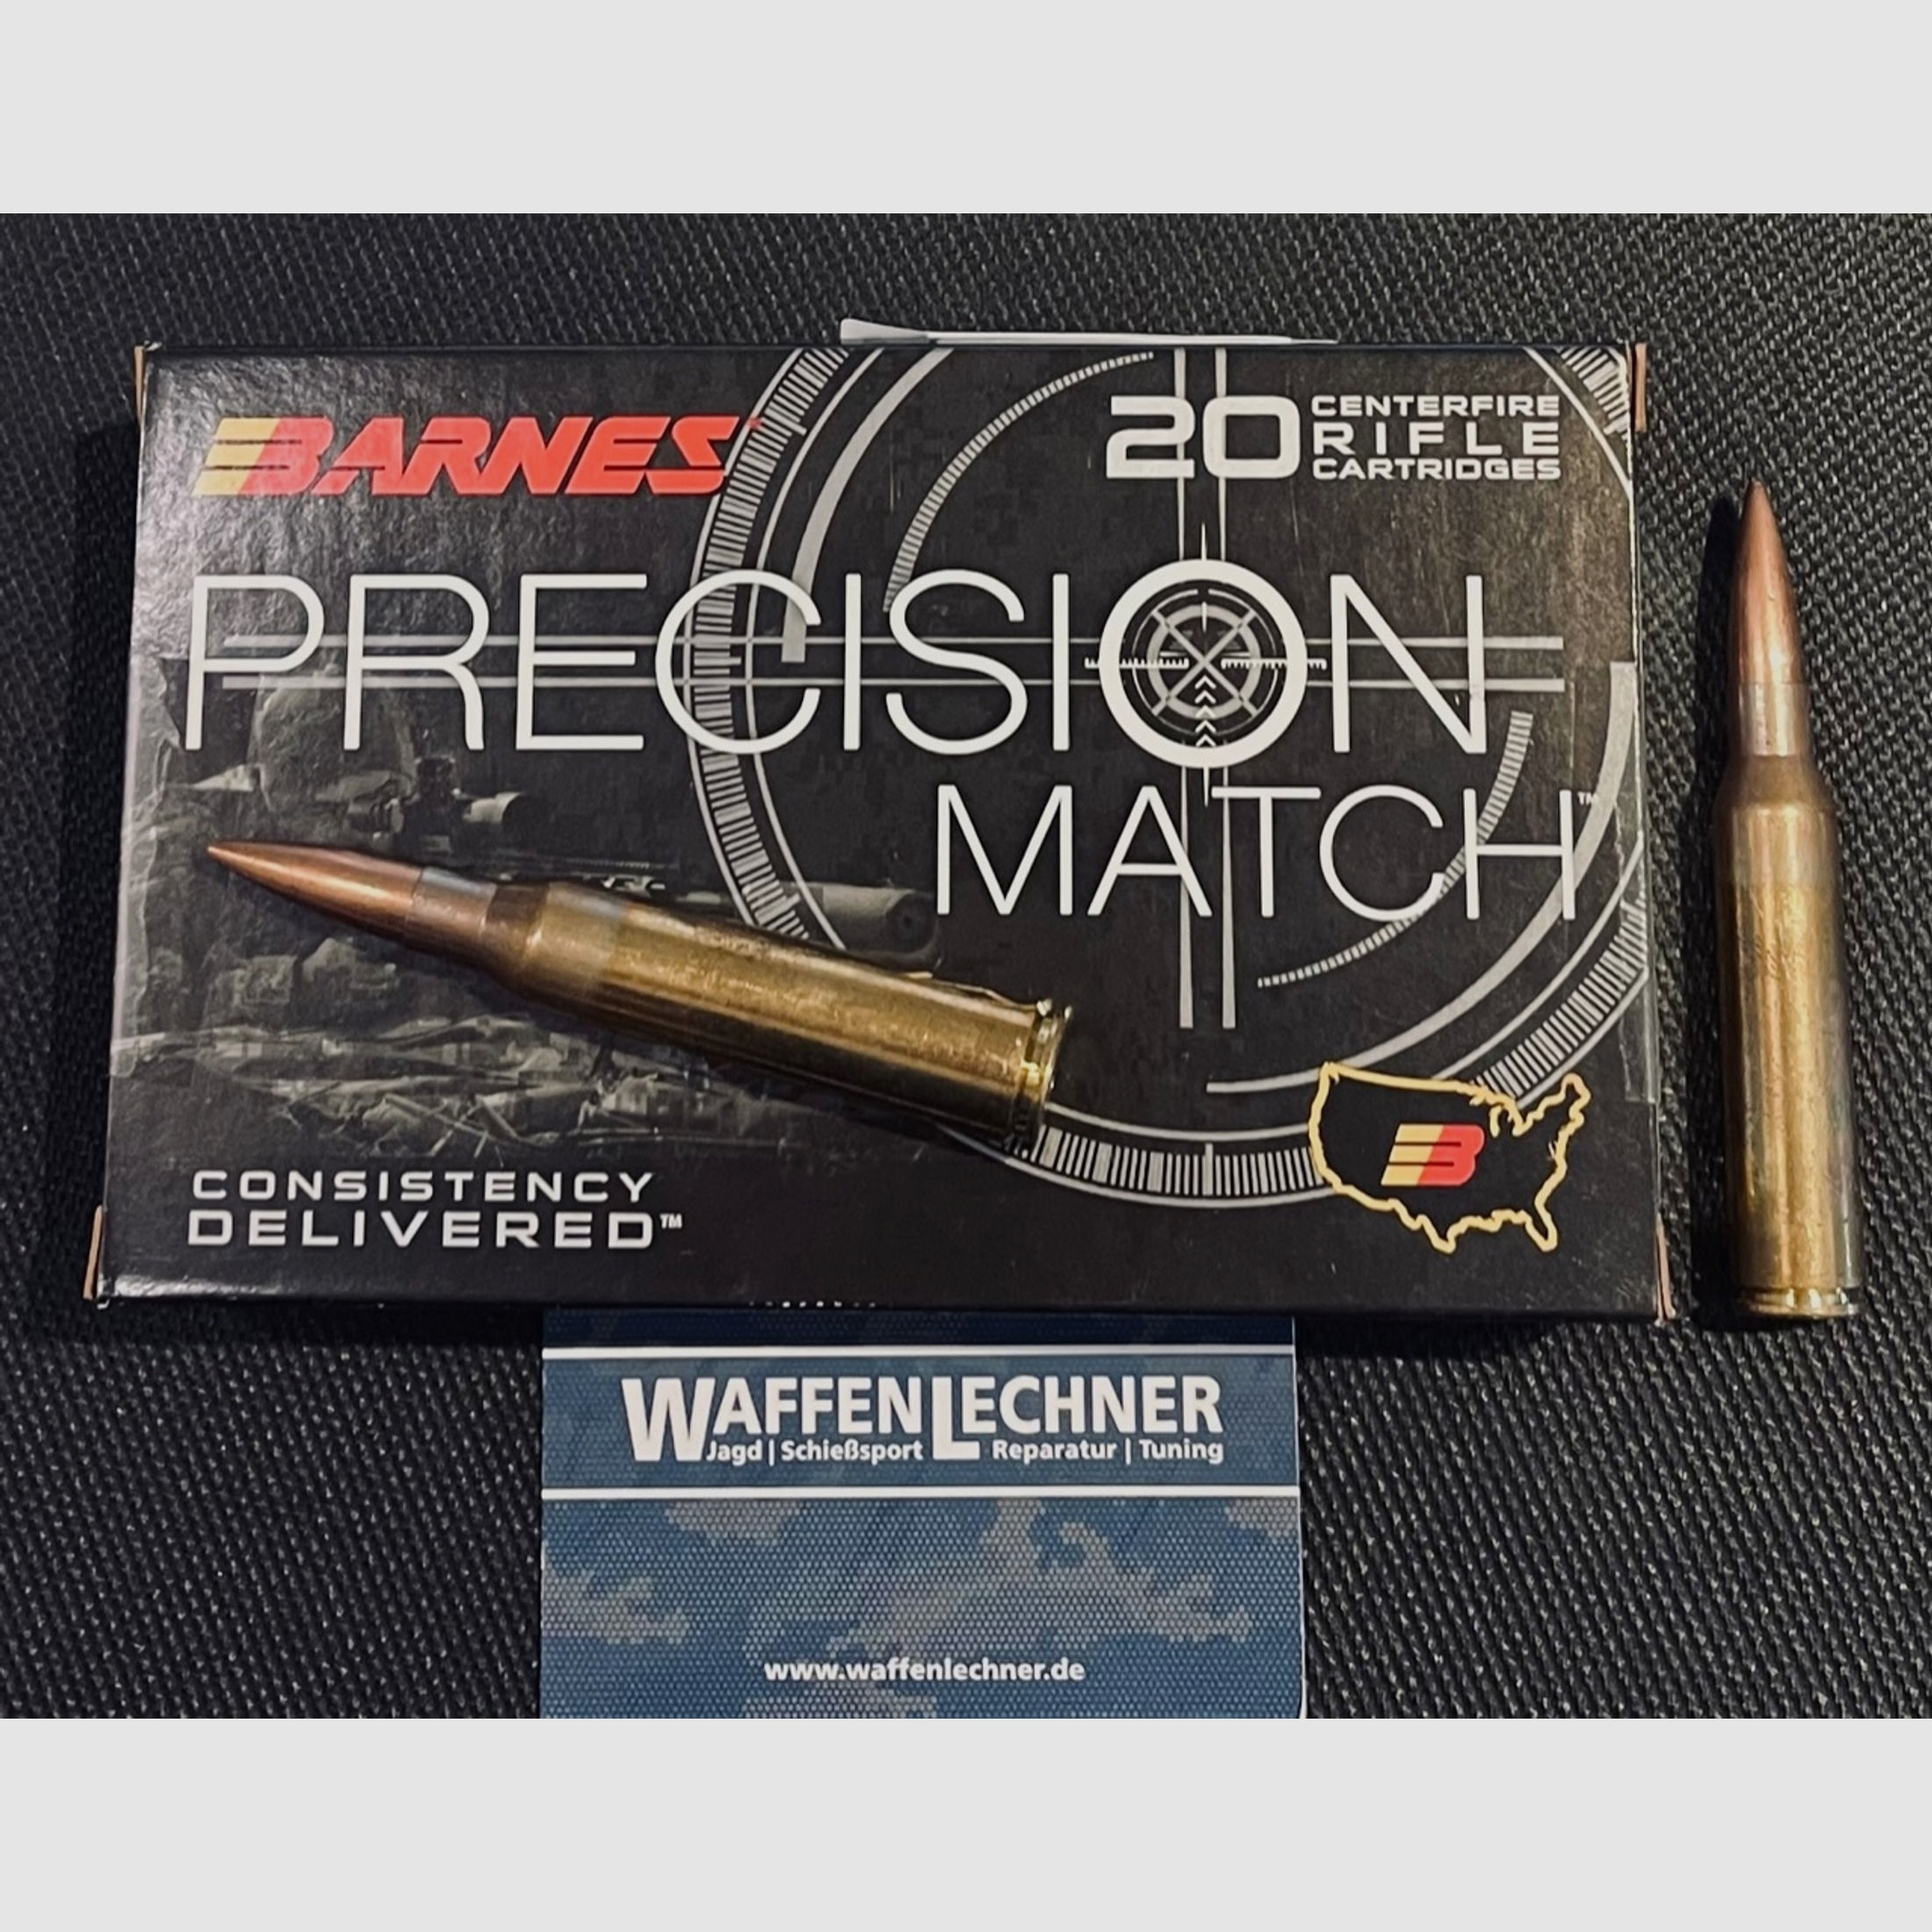 Barnes Precision Match .338 Lapua Magnum 300grs OTM, 20 Stk.